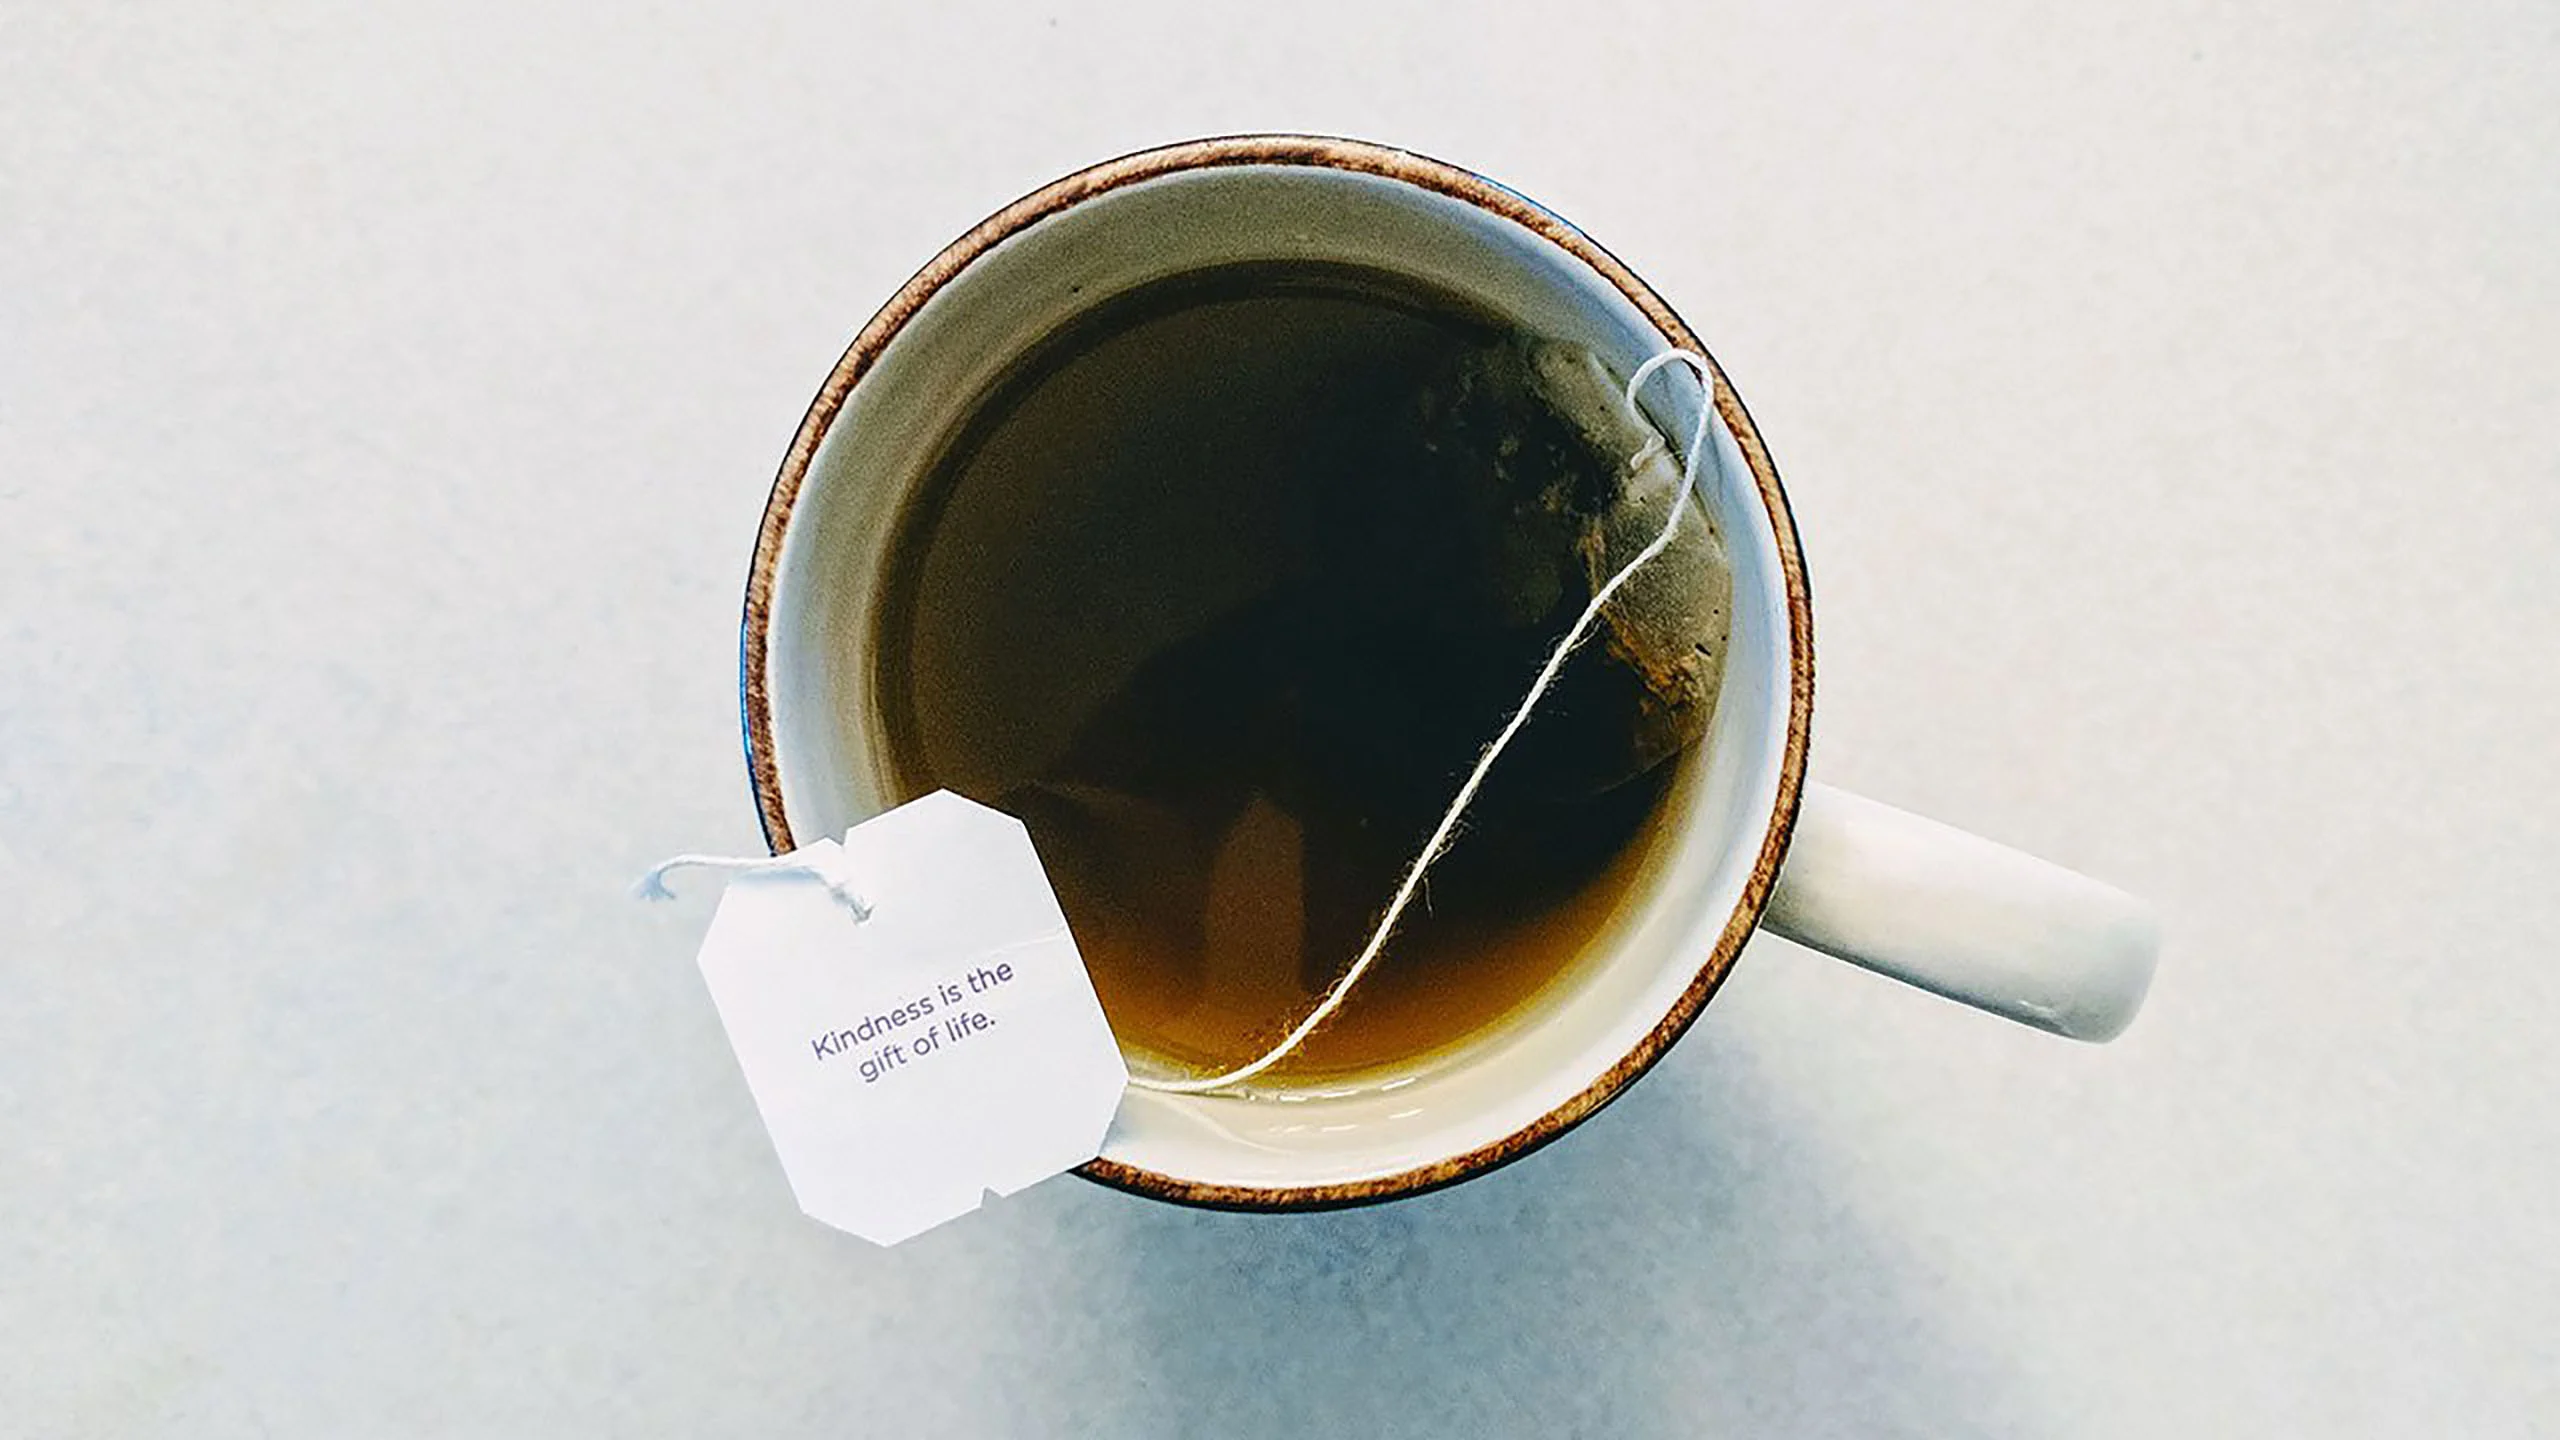 Un estudio reveló que las bolsitas de té sueltan miles de millones de microplásticos